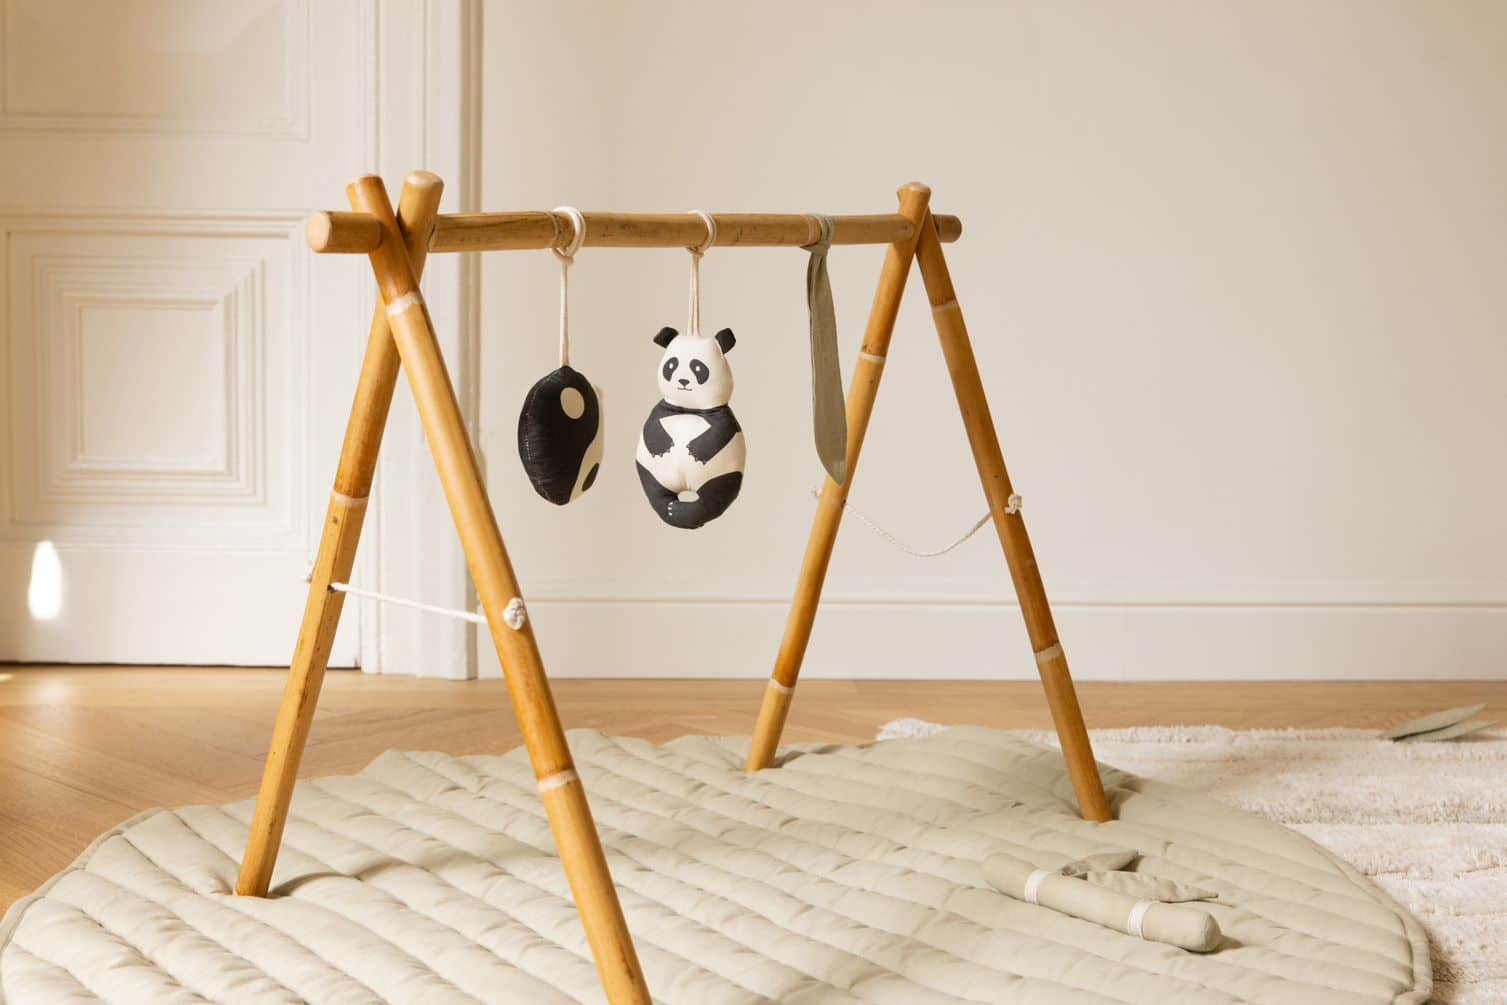 Set of 3 rattle toy hangers - Panda